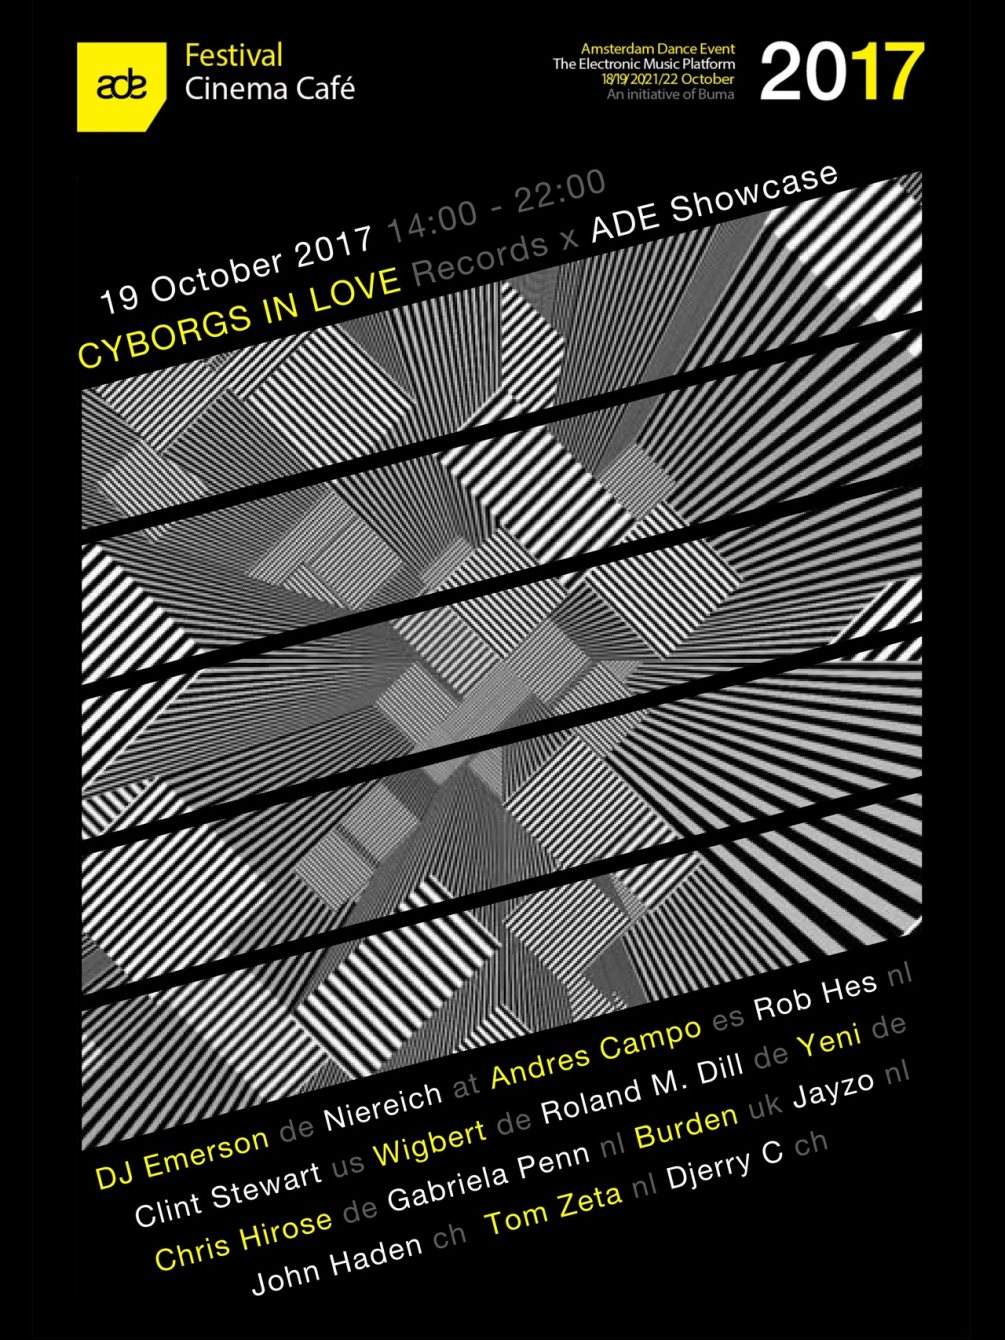 Cyborgs In Love Records x ADE Showcase 2017 Free Entry - フライヤー表